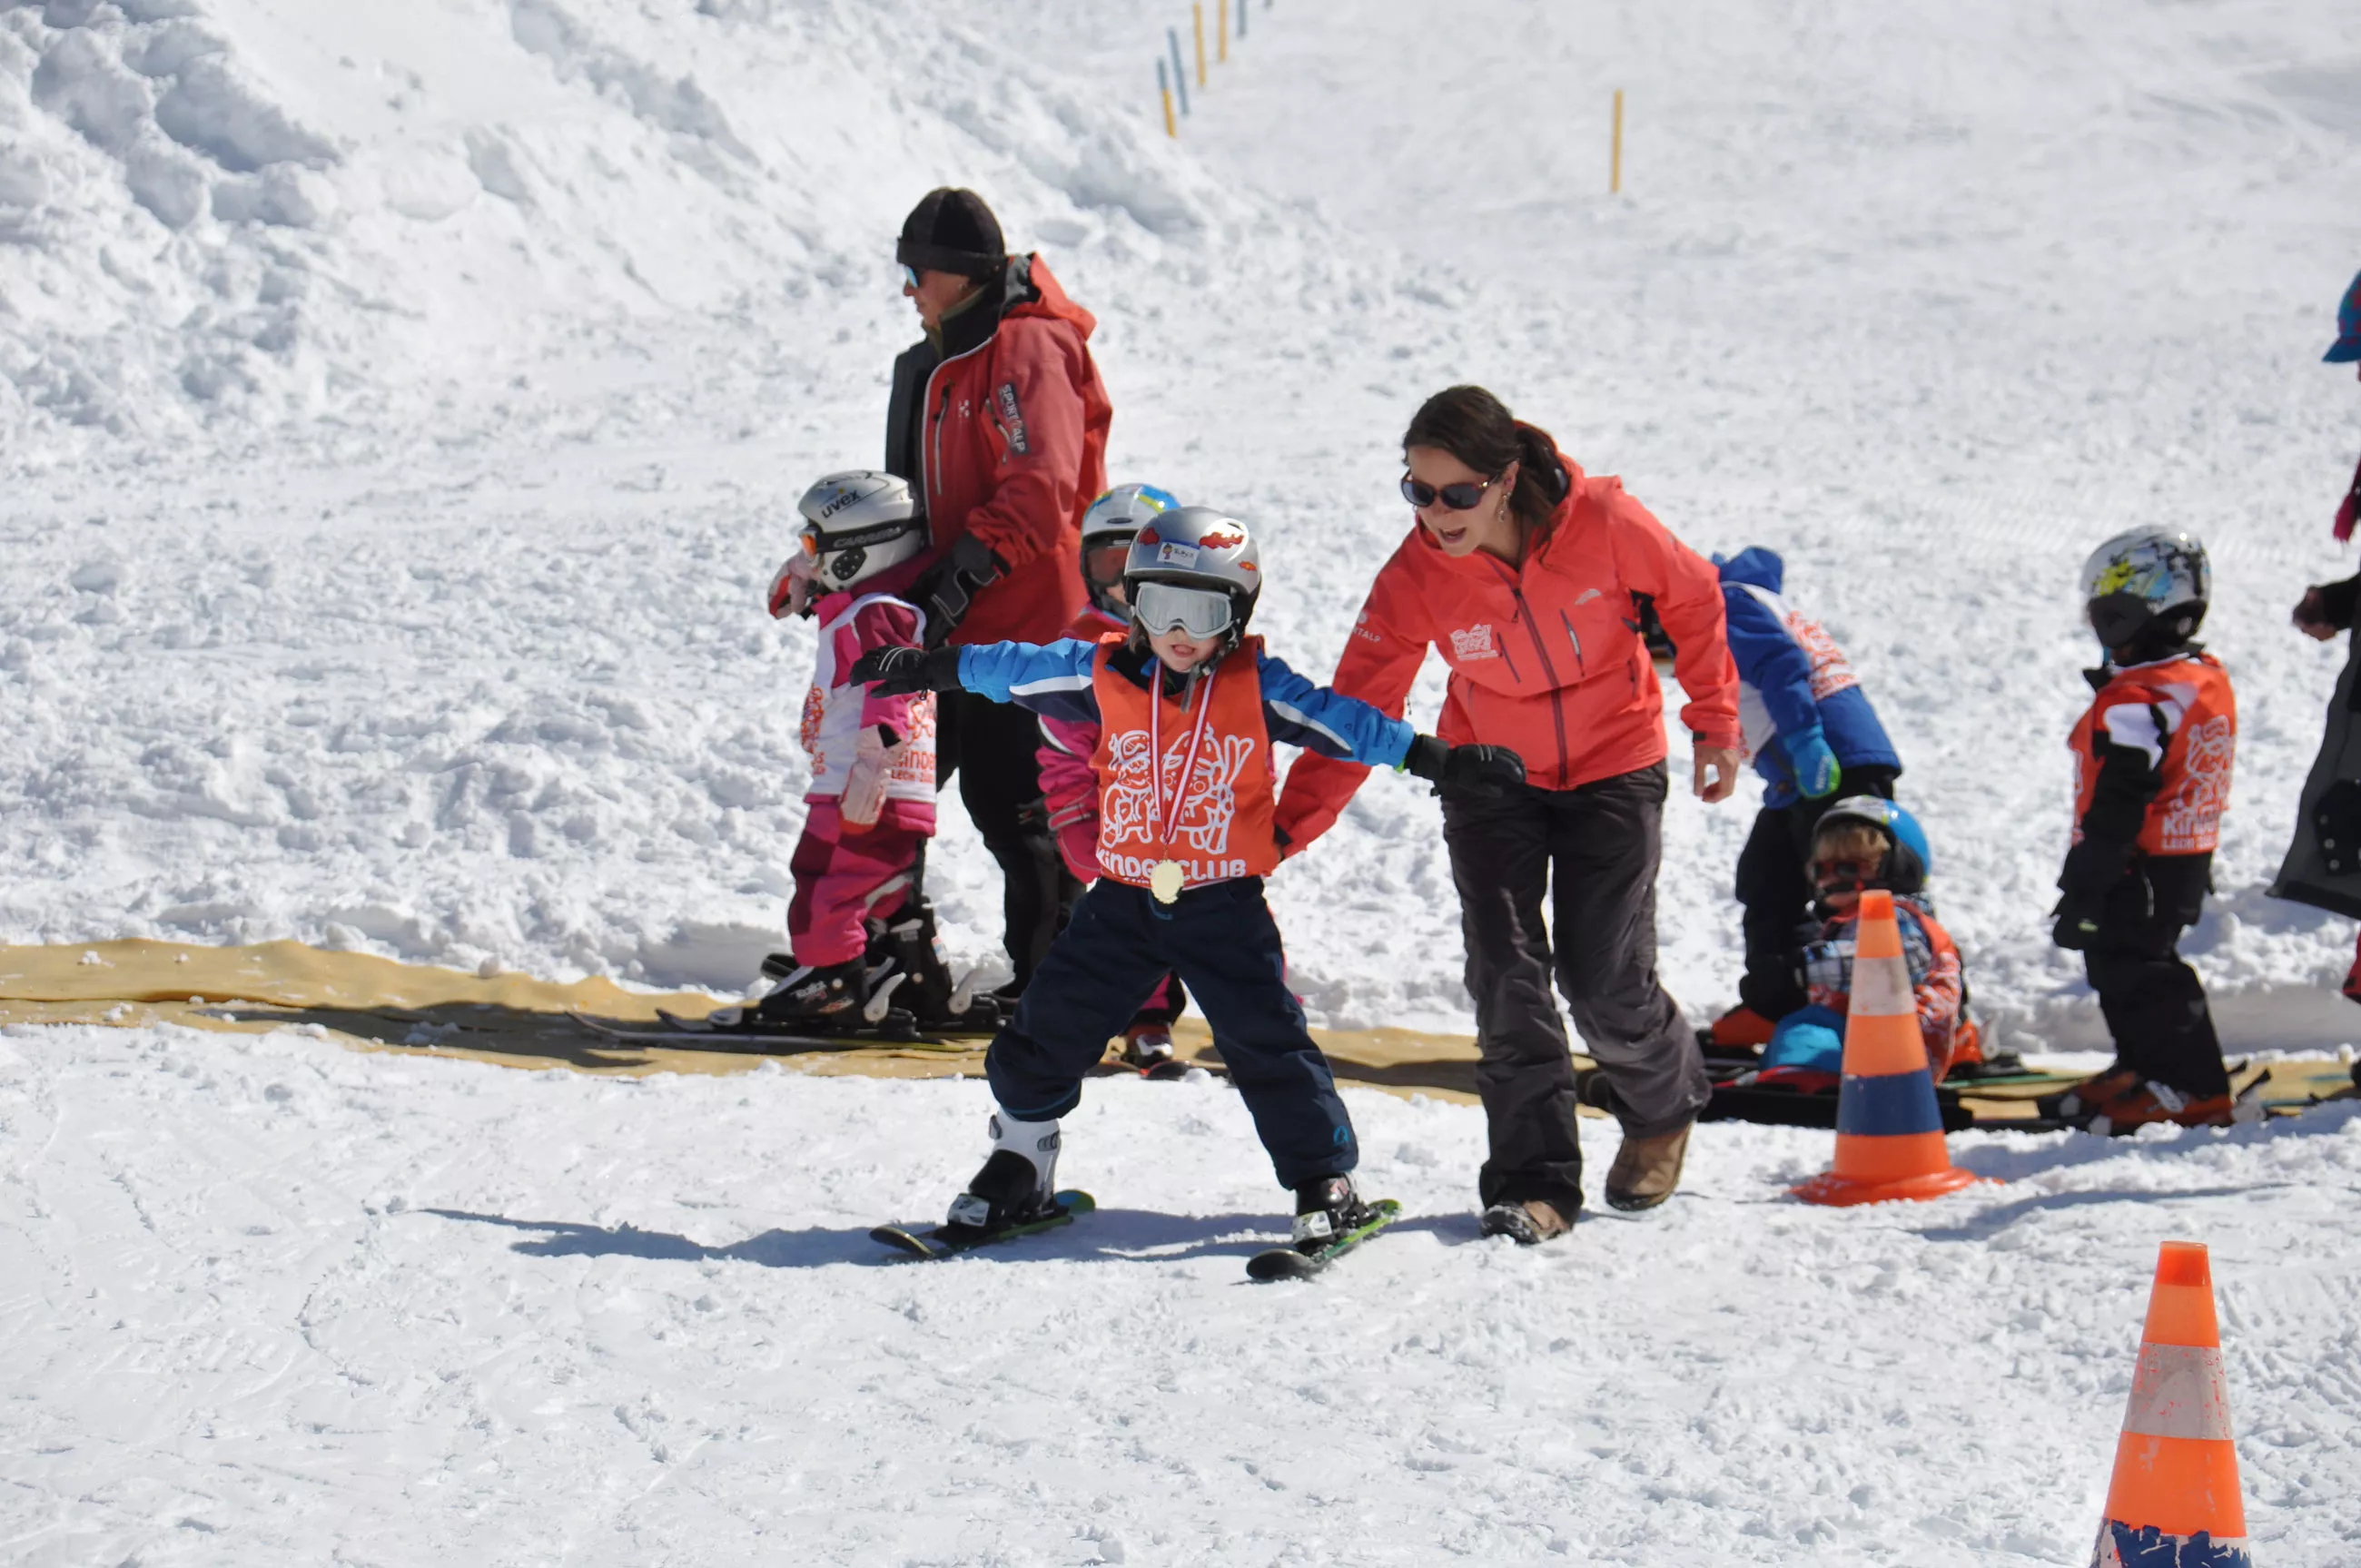 New Generation Ski & Snowboard School in Austria, Europe | Snowboarding,Skiing - Rated 0.9